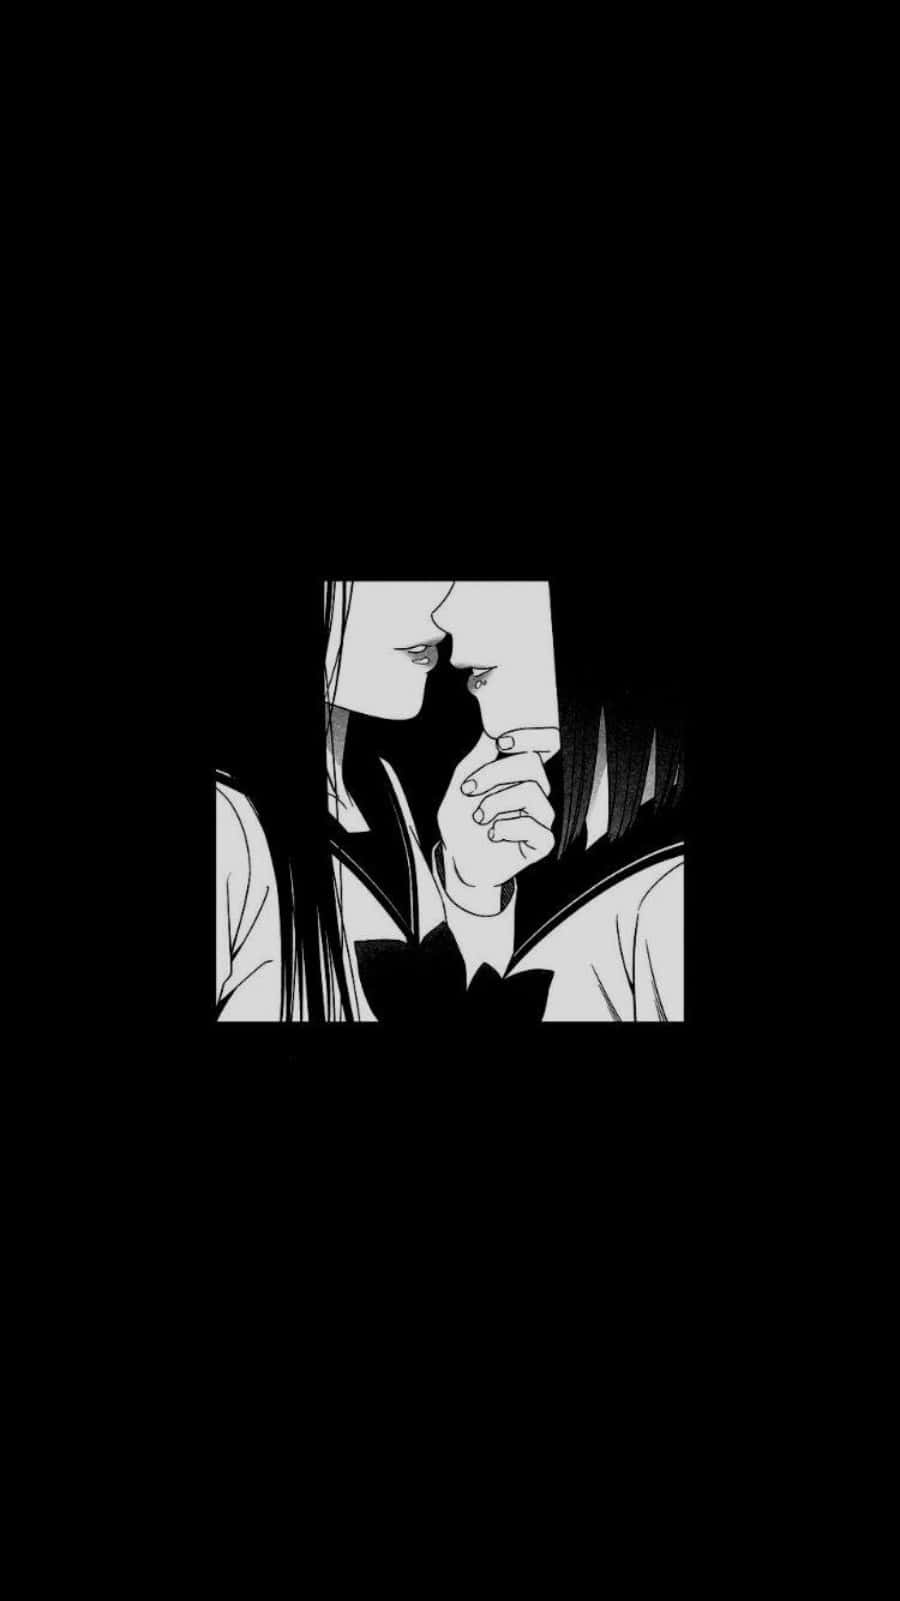 Grunge Anime Black And White Lesbian Kiss Wallpaper